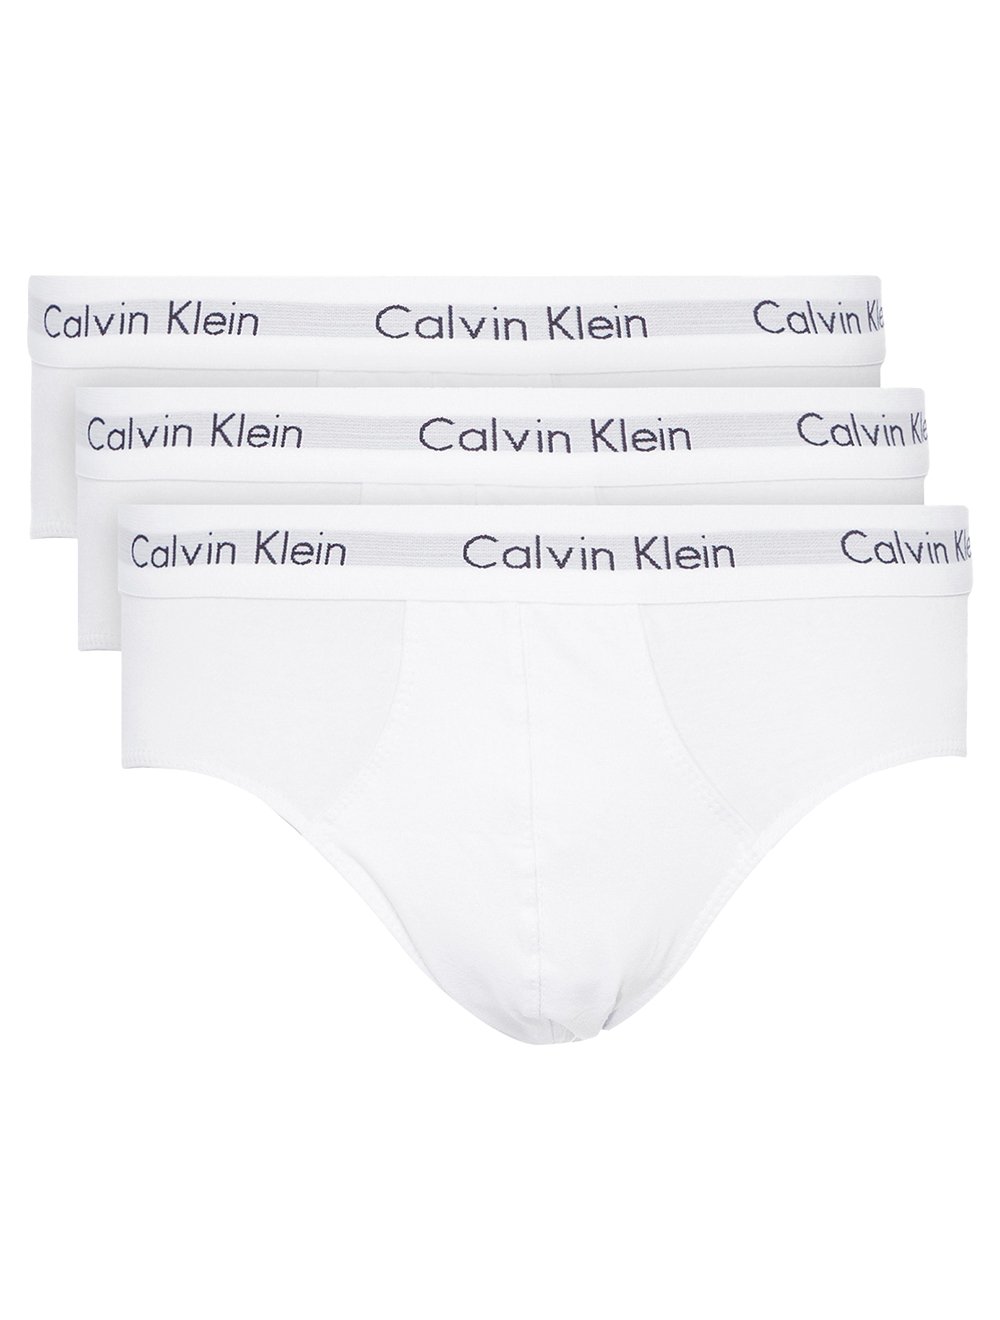 Cueca Calvin Klein Brief Cotton Stretch Classic Branca Pack 3UN